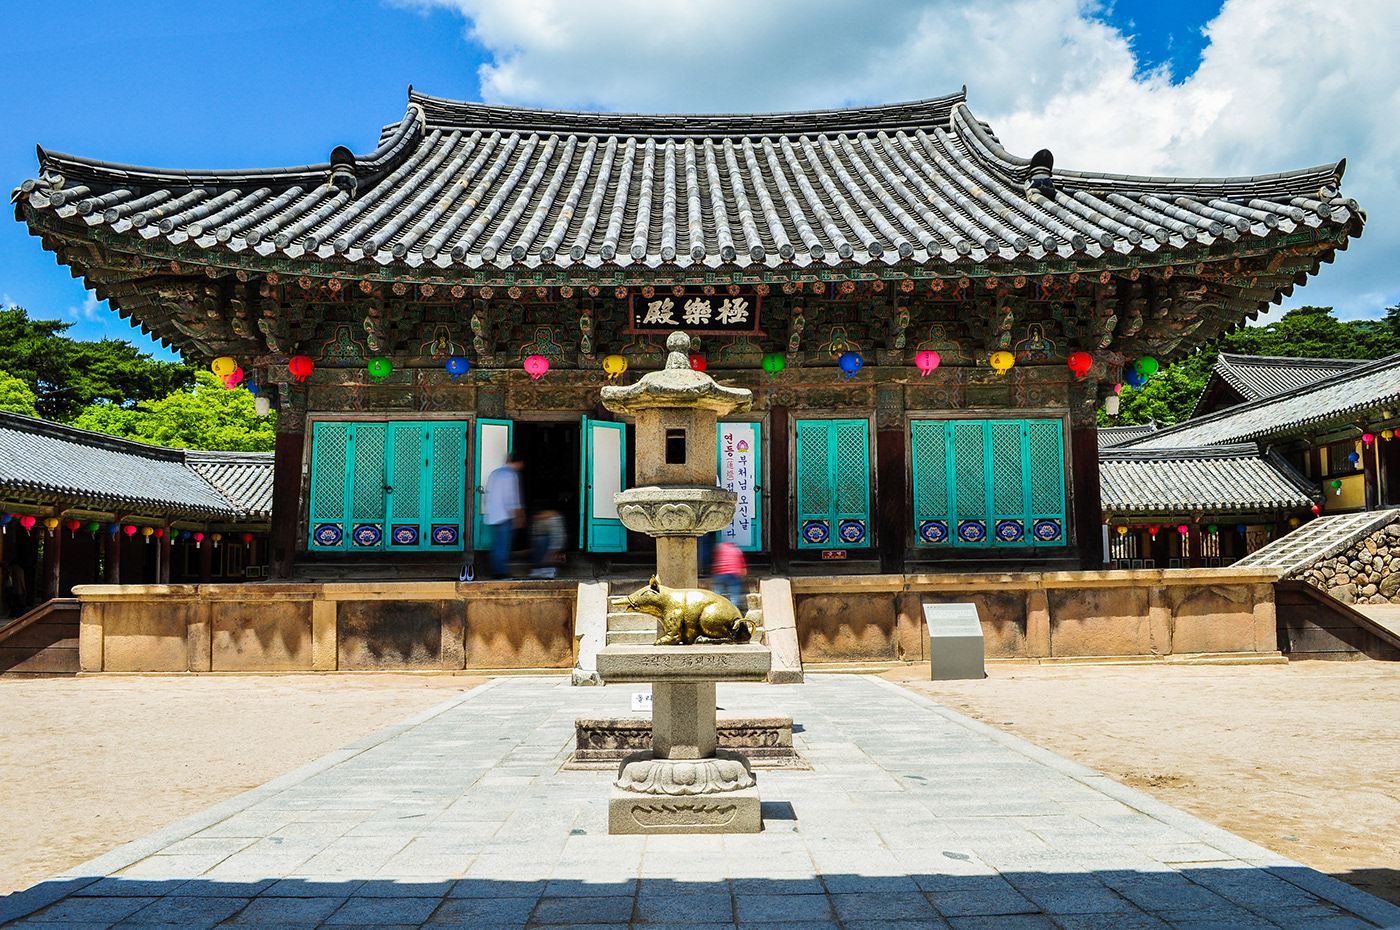 suatboke D90 Nikon southkorea temple traveler